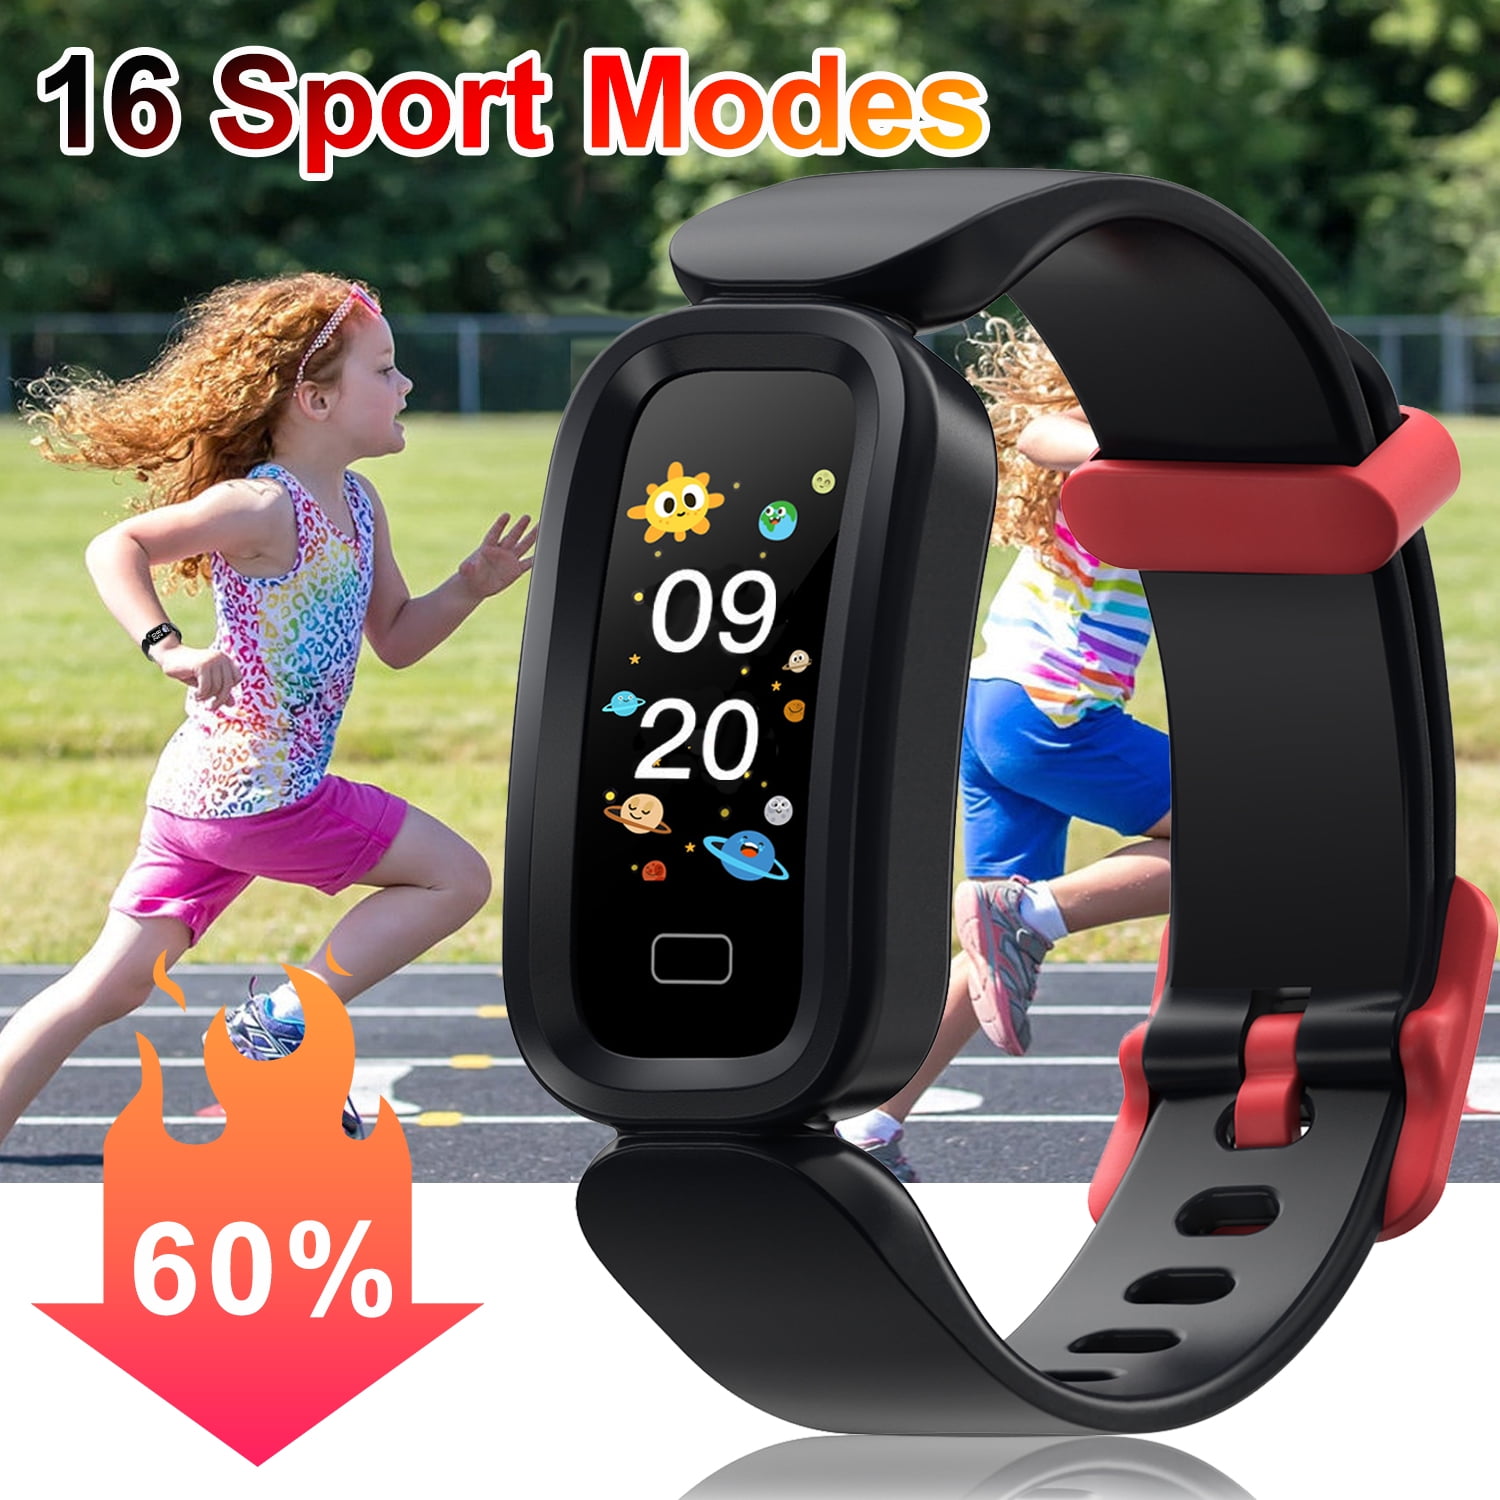 Kids Fitness Tracker, Activity Tracker for Boys Girls, IP68 Waterproof Smart Watch with Heart Rate Sleep Monito, Pedometer, Alarm 16 Sport Modes, Black - Walmart.com